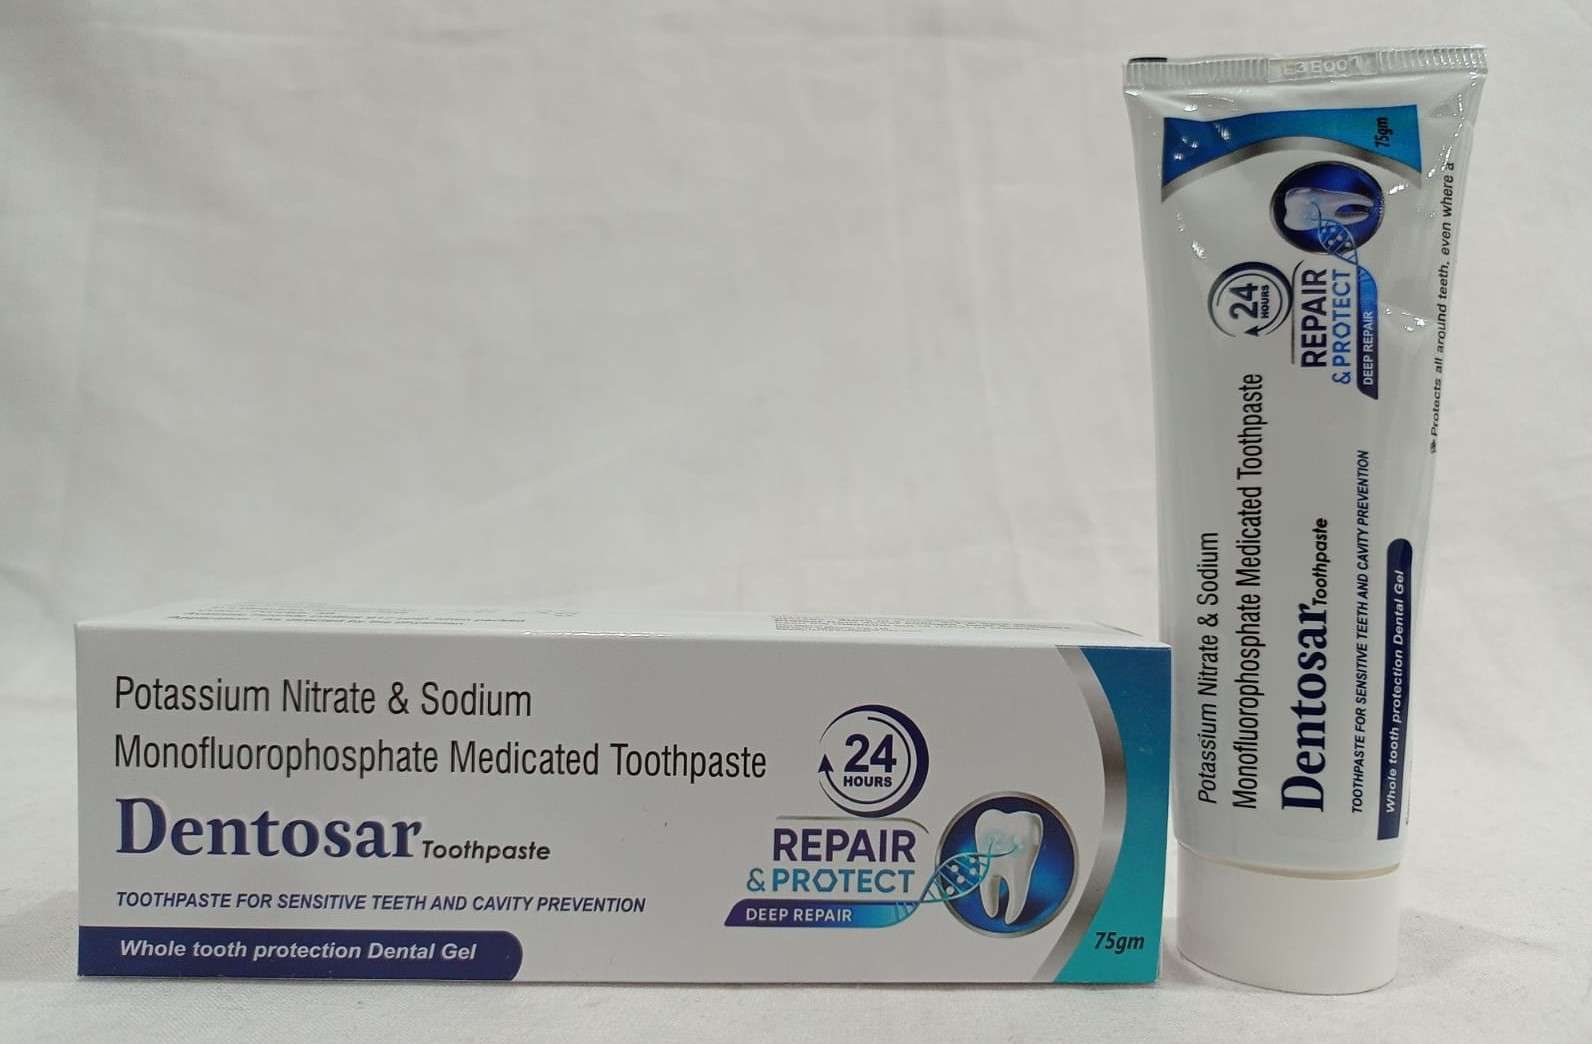 potassium nitrate 5% w/w + sodium monofluorophosphate 0.7% w/w  medicated toothpaste